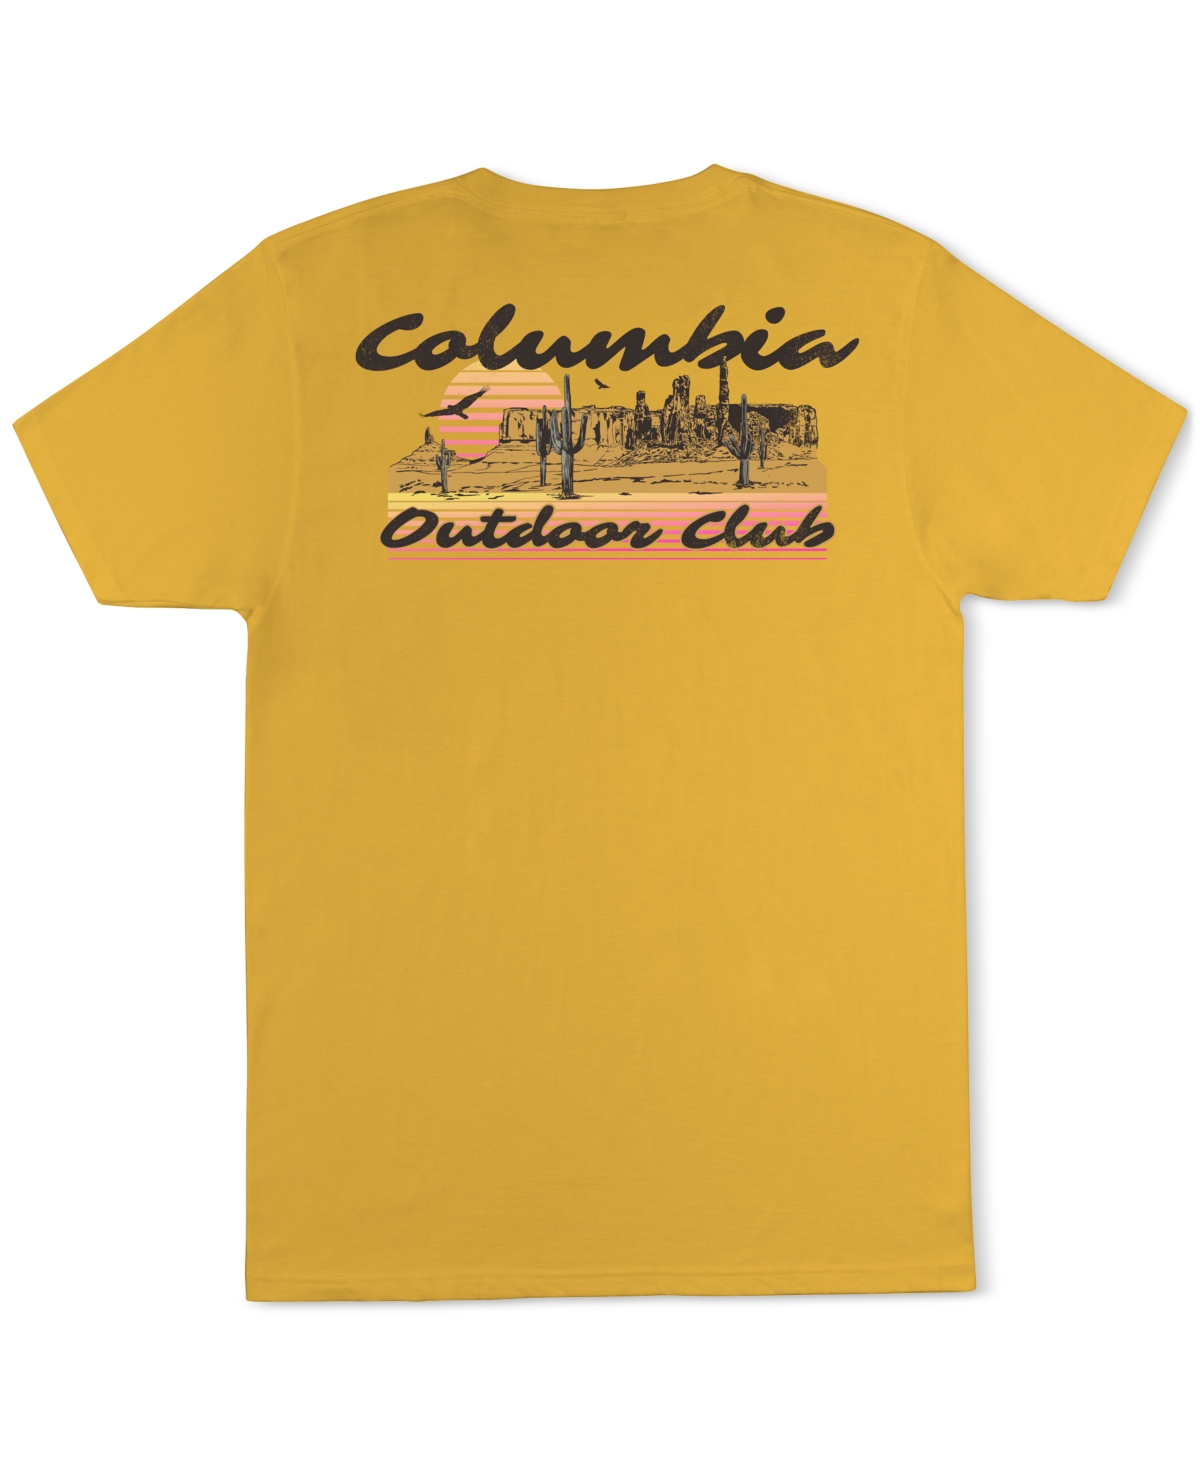 Men's Outdoor Club Graphic T-Shirt - Mustard